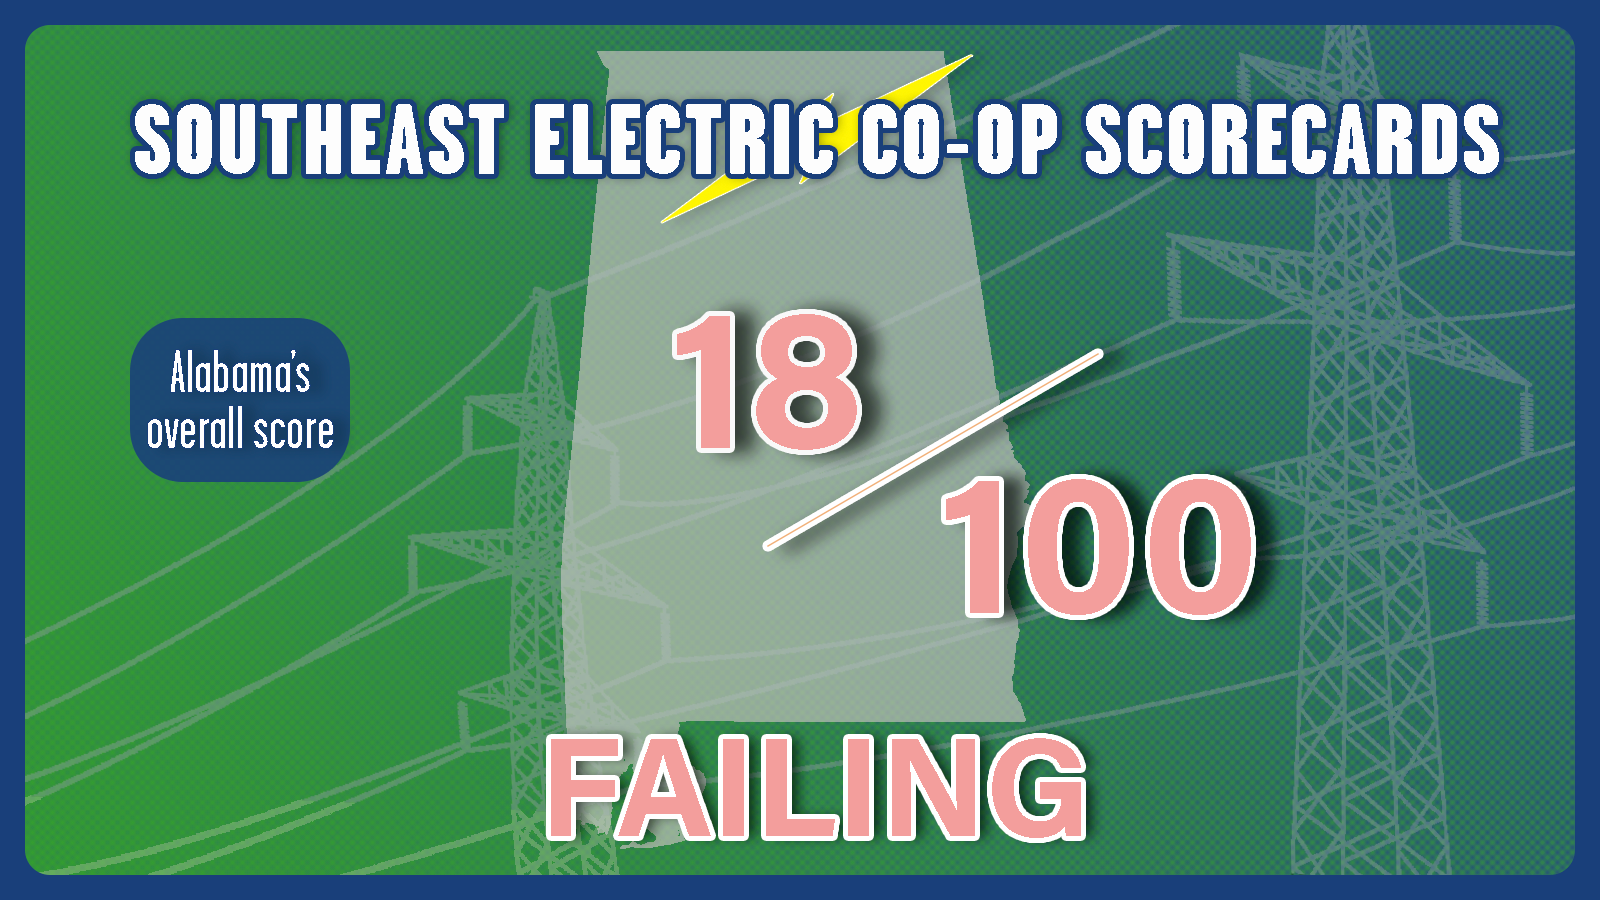 Alabama electric cooperative scorecard overall score